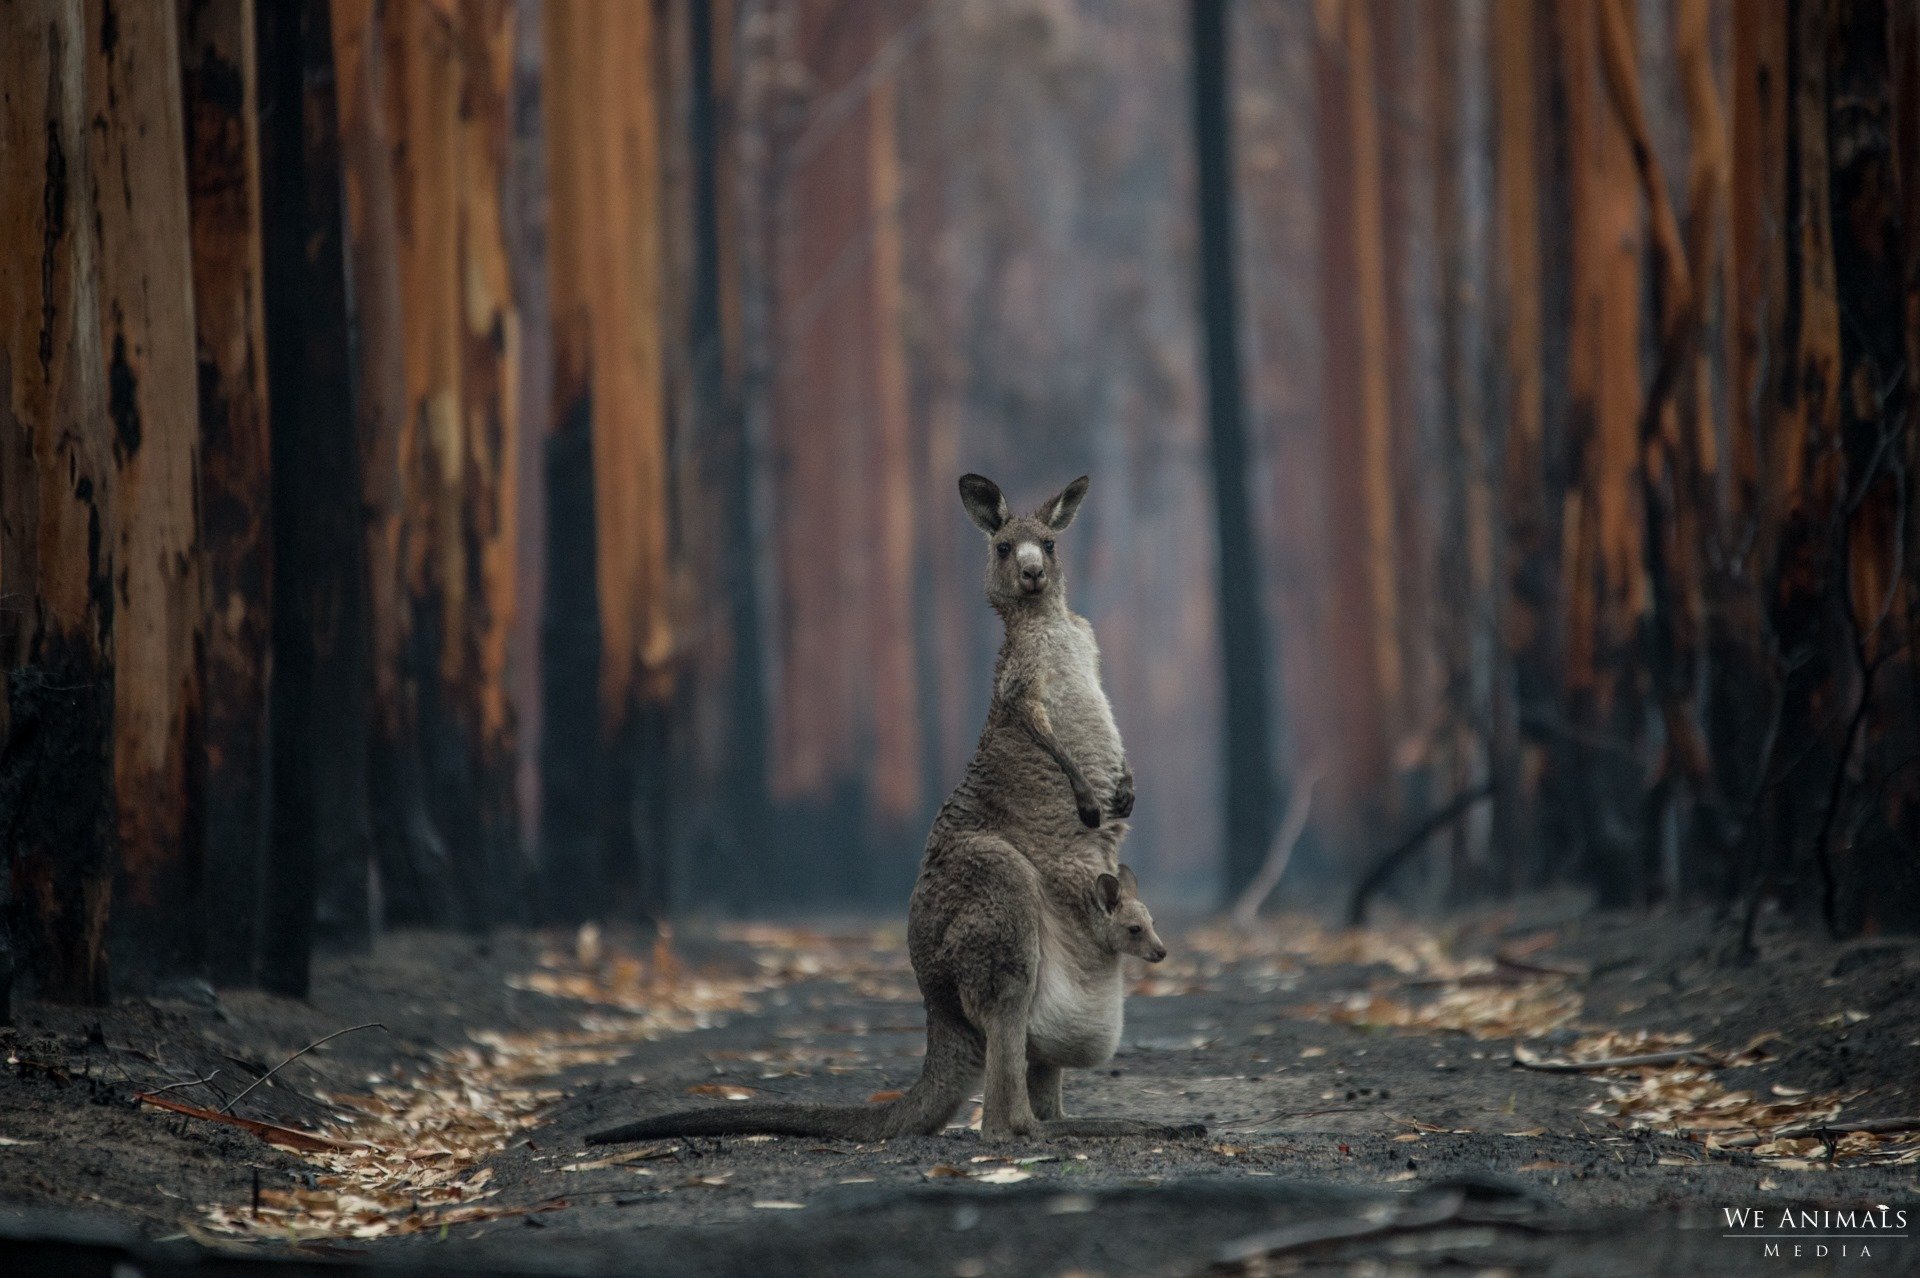 A photo of a kangaroo in burnt bushland.